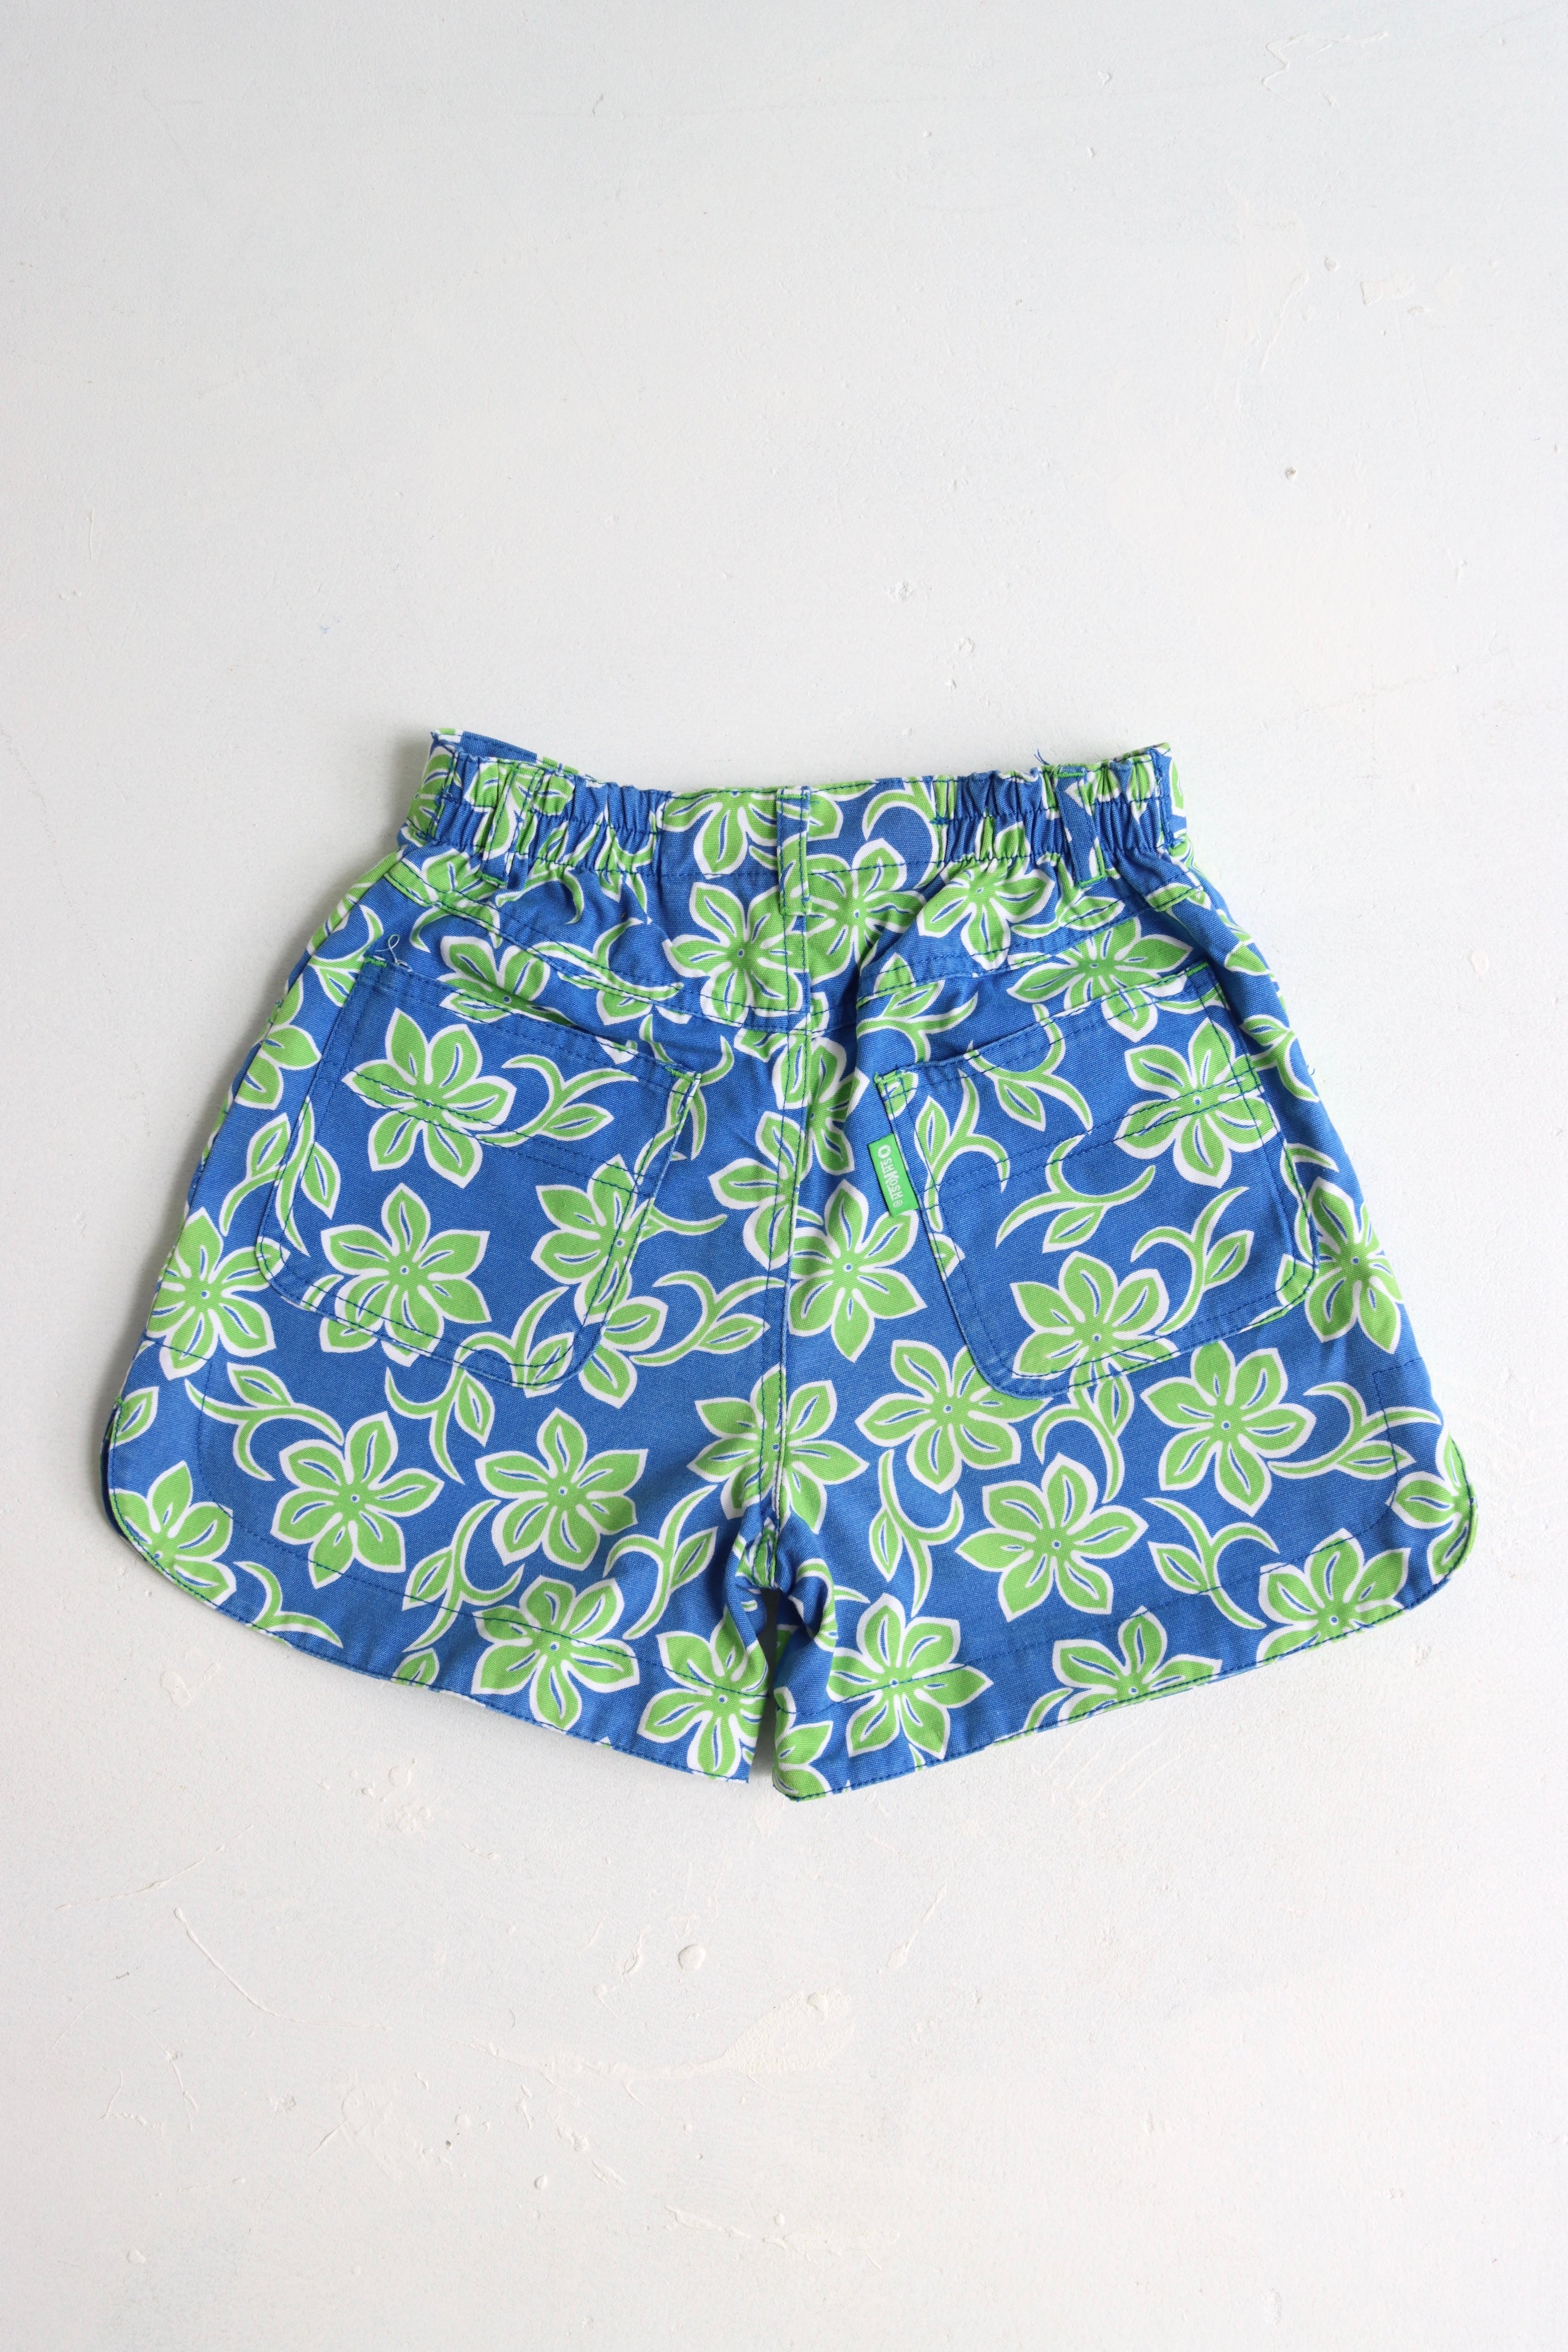 Vintage tropical green/blue floral OshKosh shorts - size 7/8 years